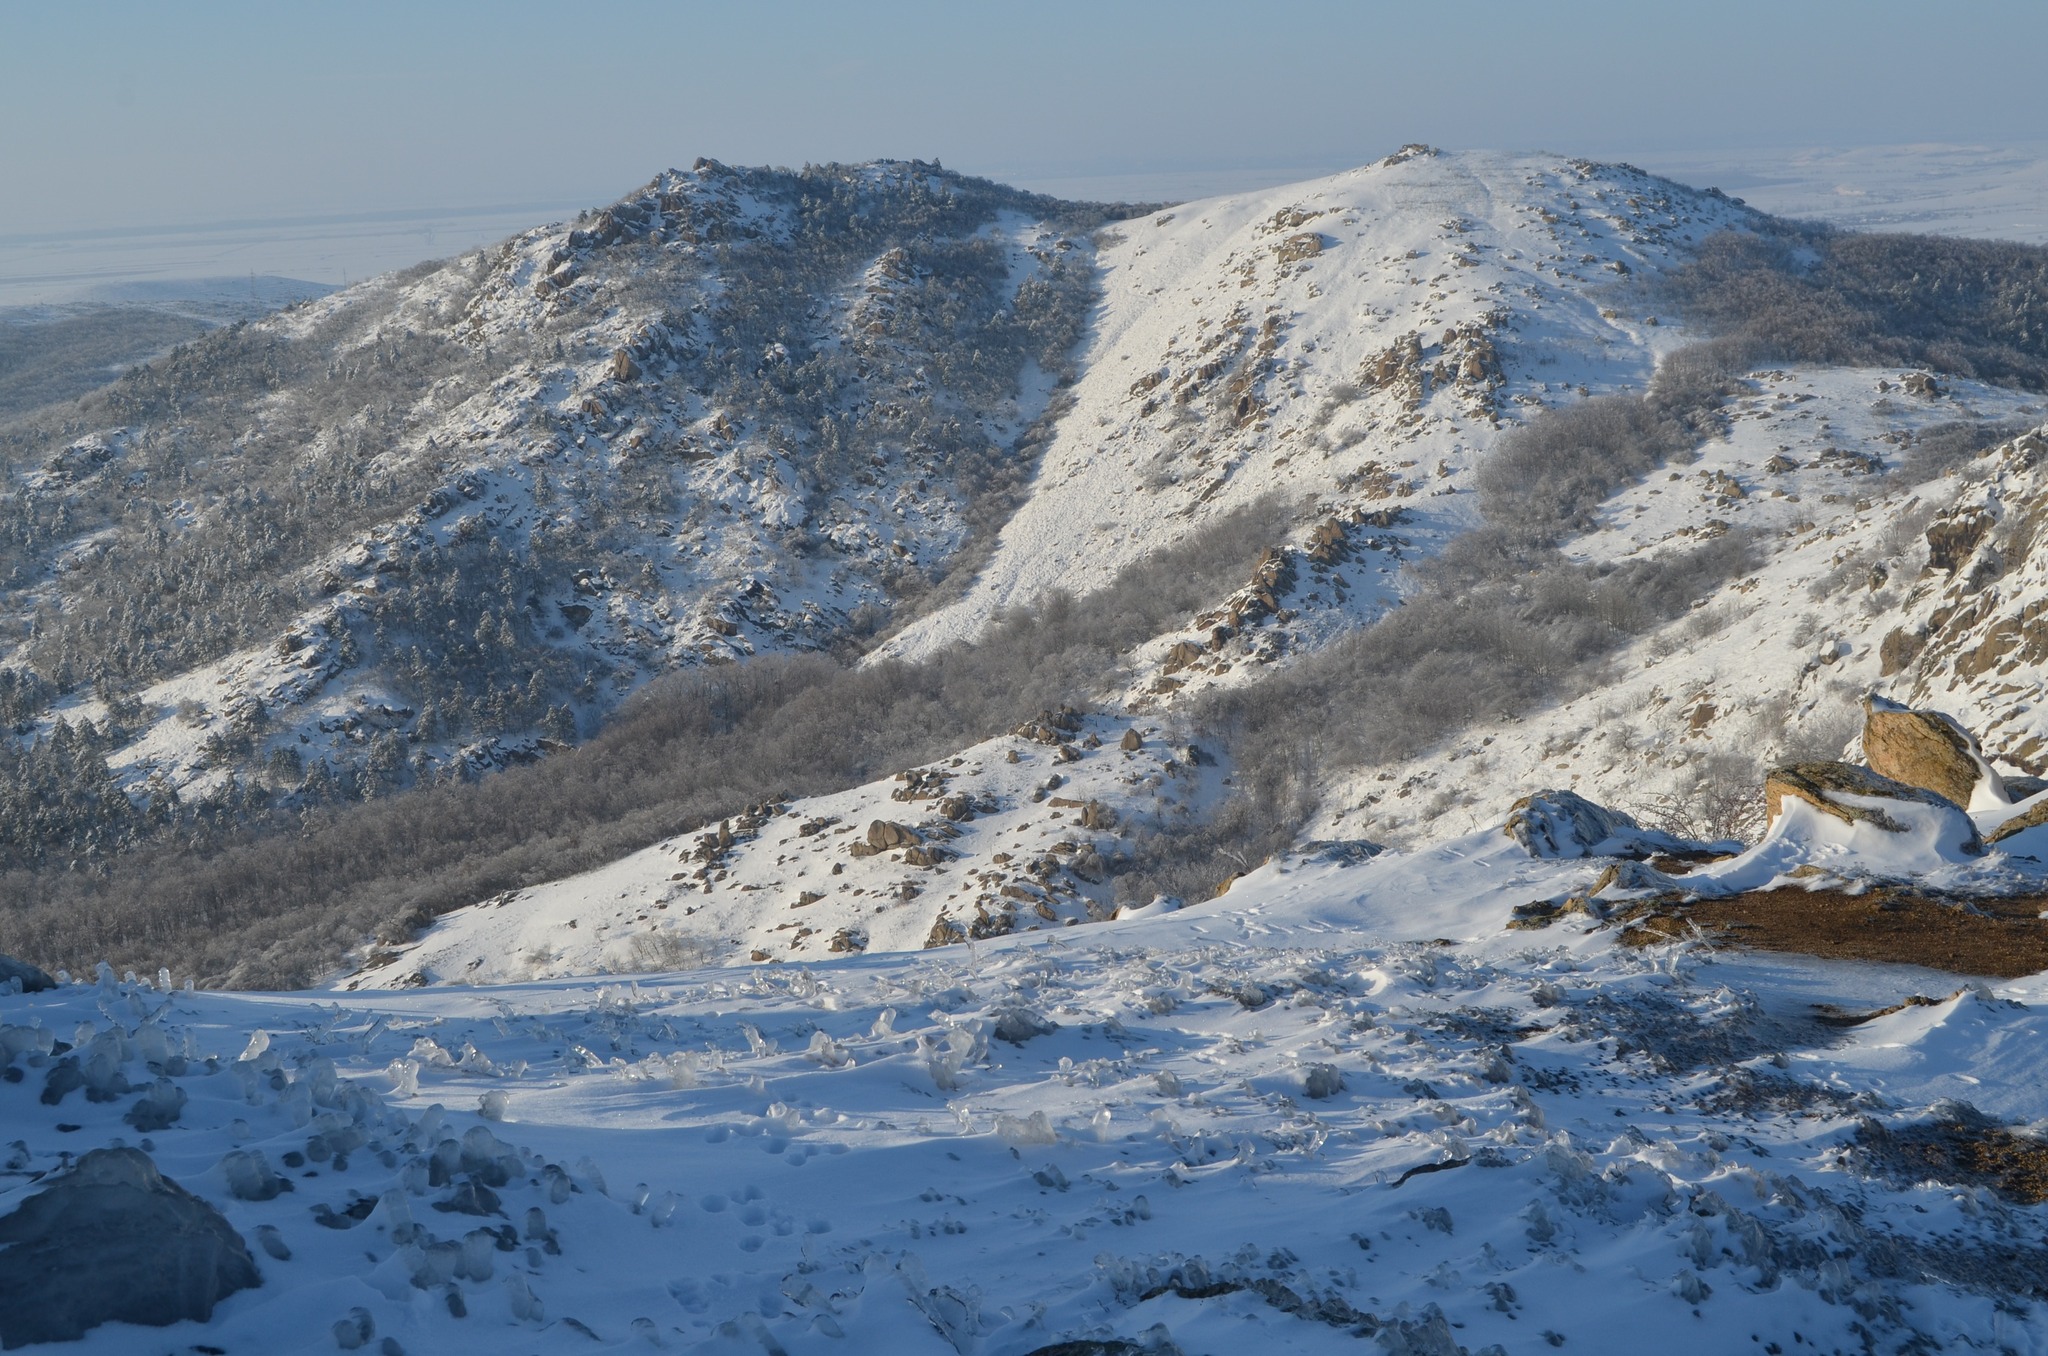  Vârfurile gemene Cheia, Munții Cheii, culmea Pricopanului - Andrei Raftopol